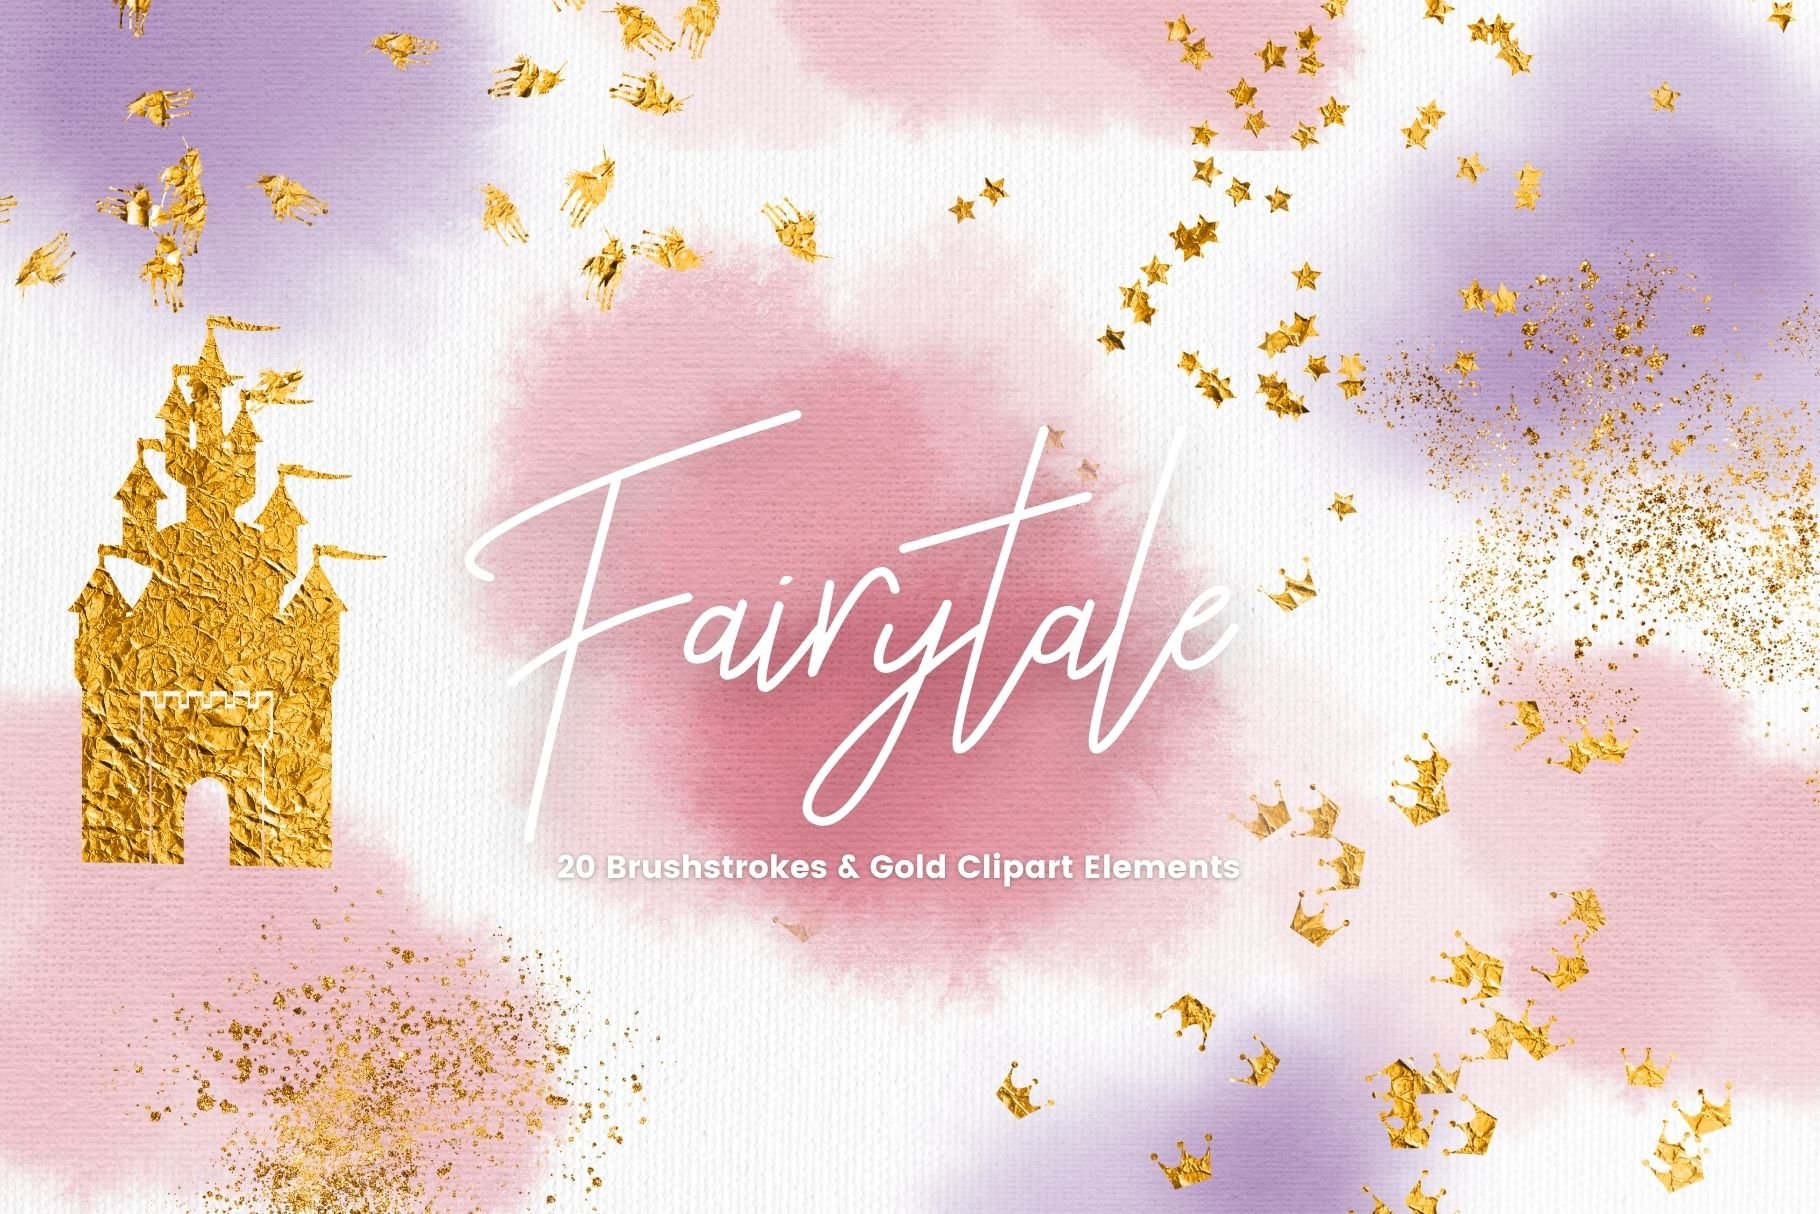 Watercolour Fairytale Clipart cover image.